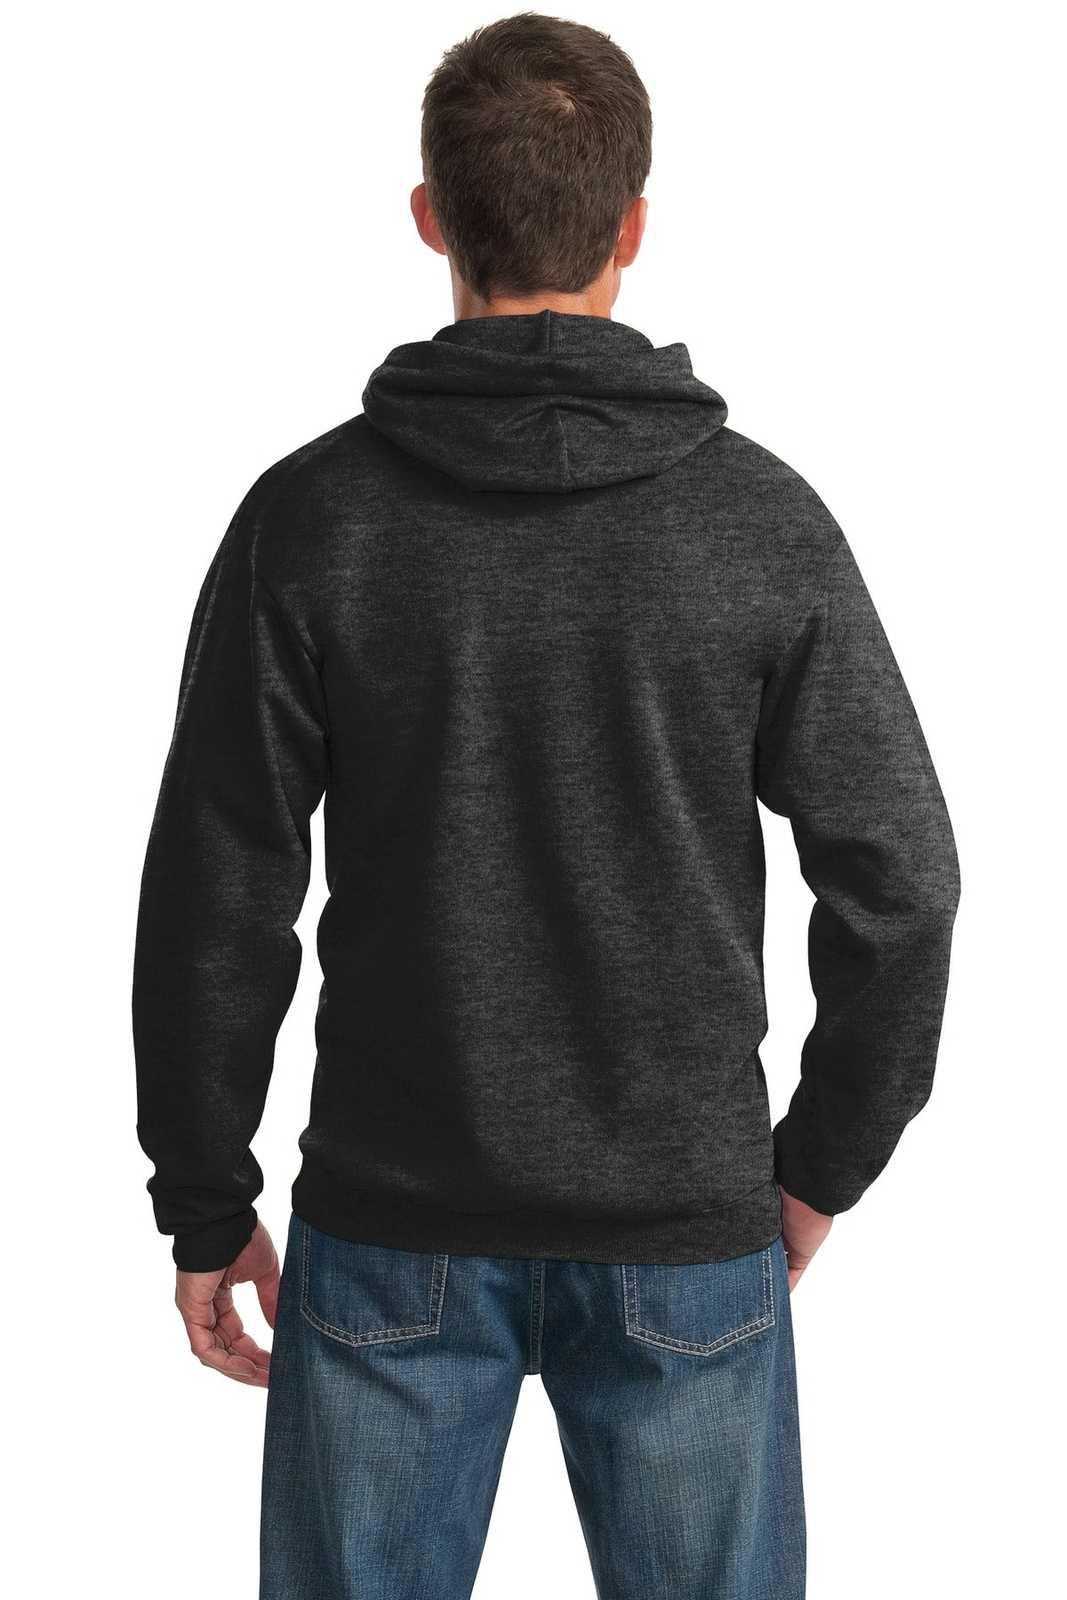 Port &amp; Company PC90H Essential Fleece Pullover Hooded Sweatshirt - Dark Heather Gray - HIT a Double - 2